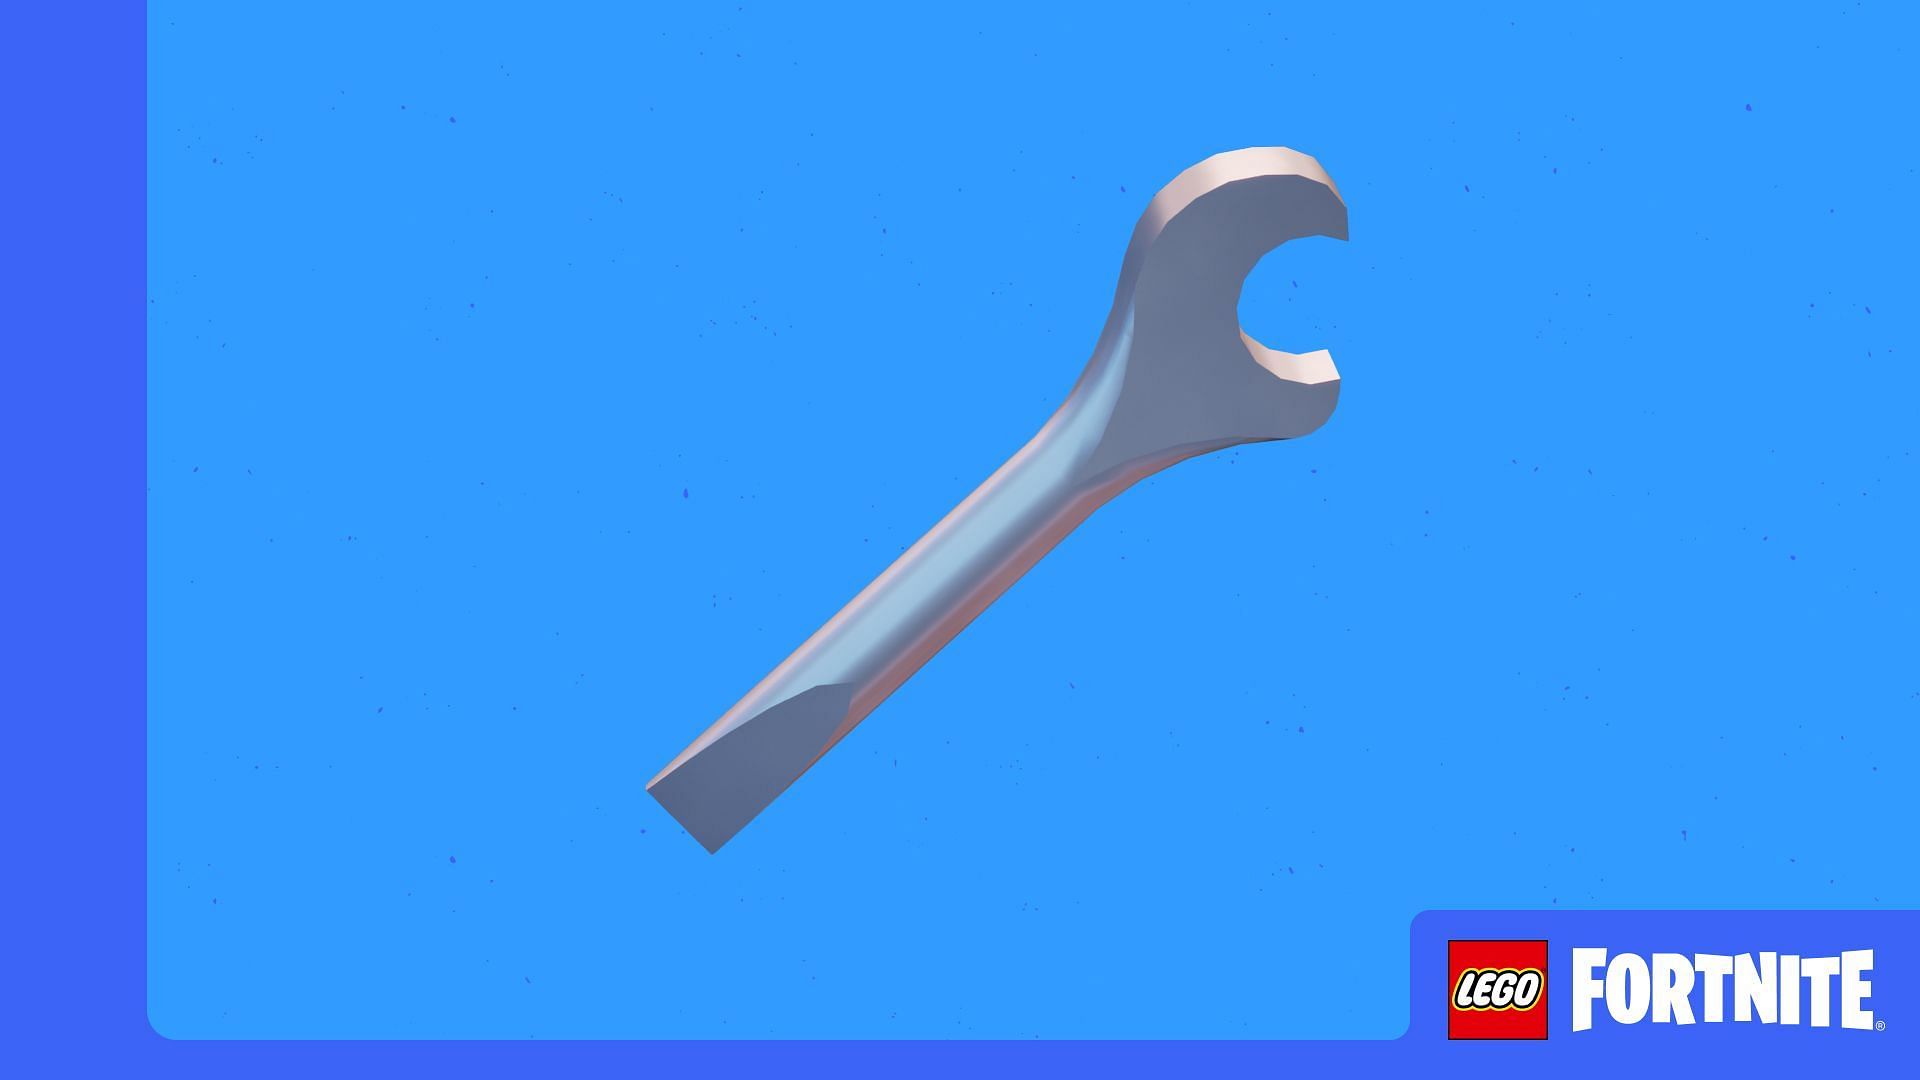 LEGO Fortnite Wrench (Image via Epic Games)